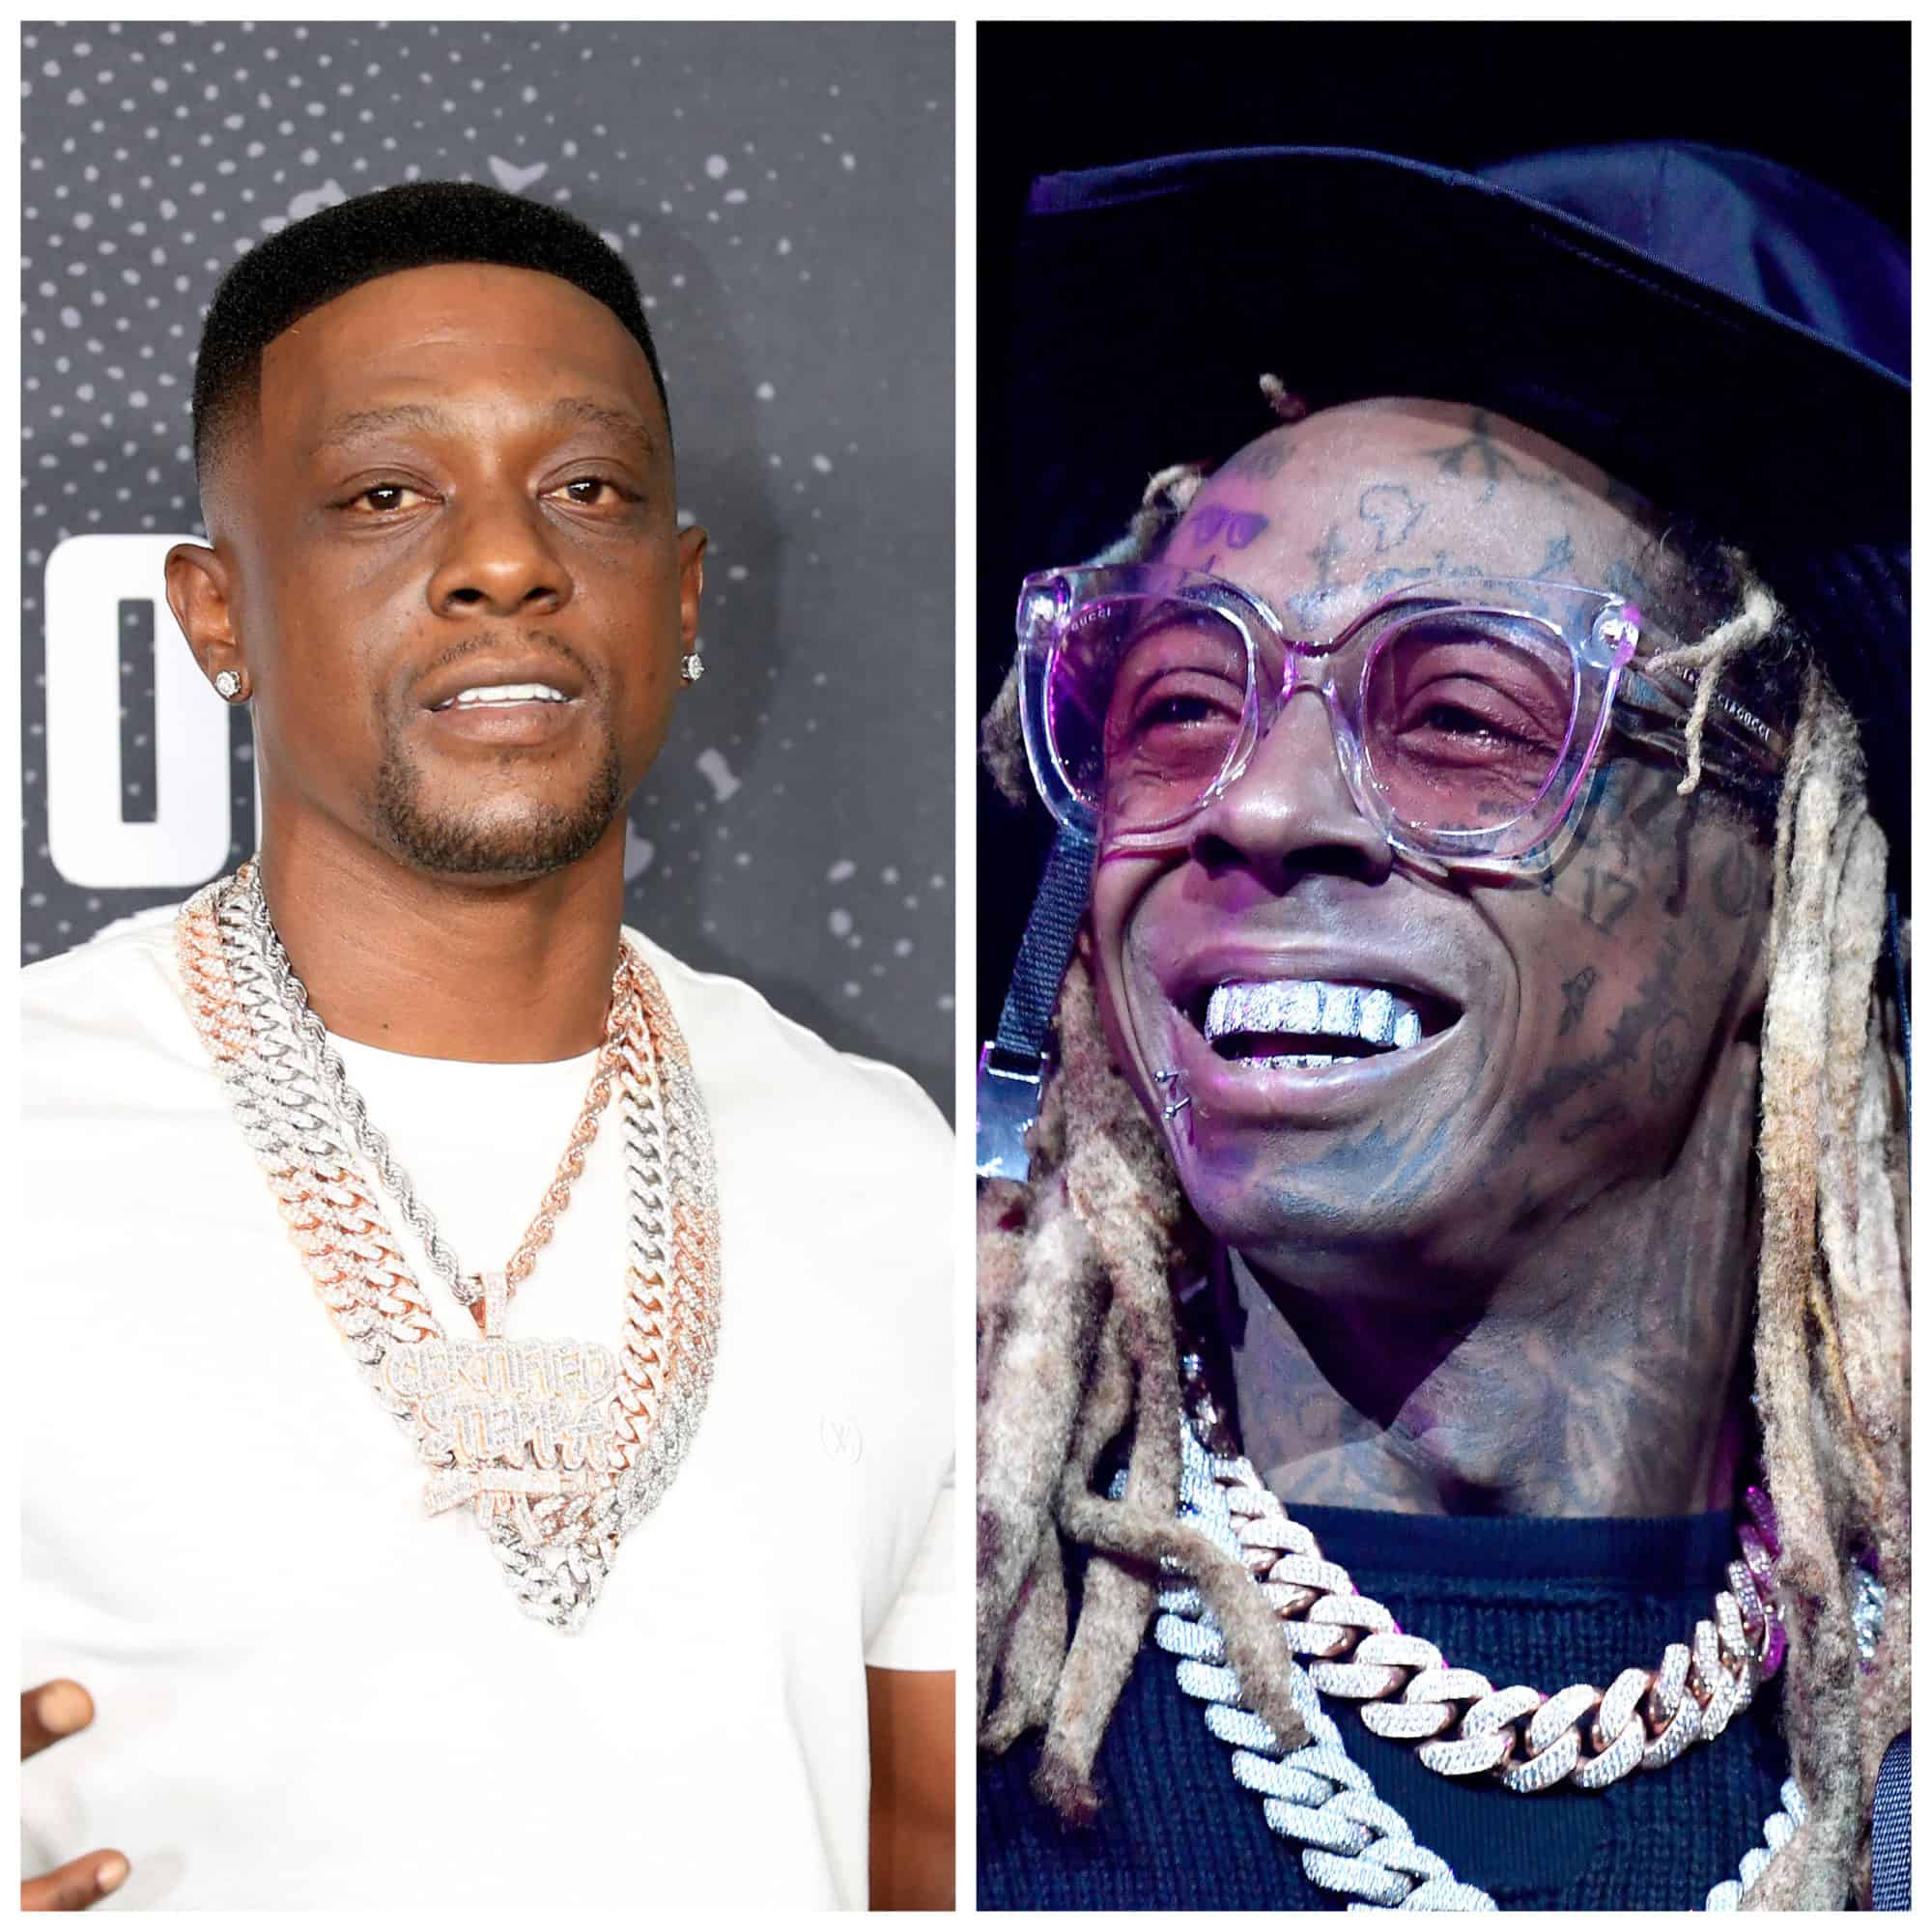 Boosie Said He Wasn’t Surprised By Lil Wayne’s Endorsement Of Trump: ‘I Always Felt Like Wayne Felt Like He Was Rich More Than Black’